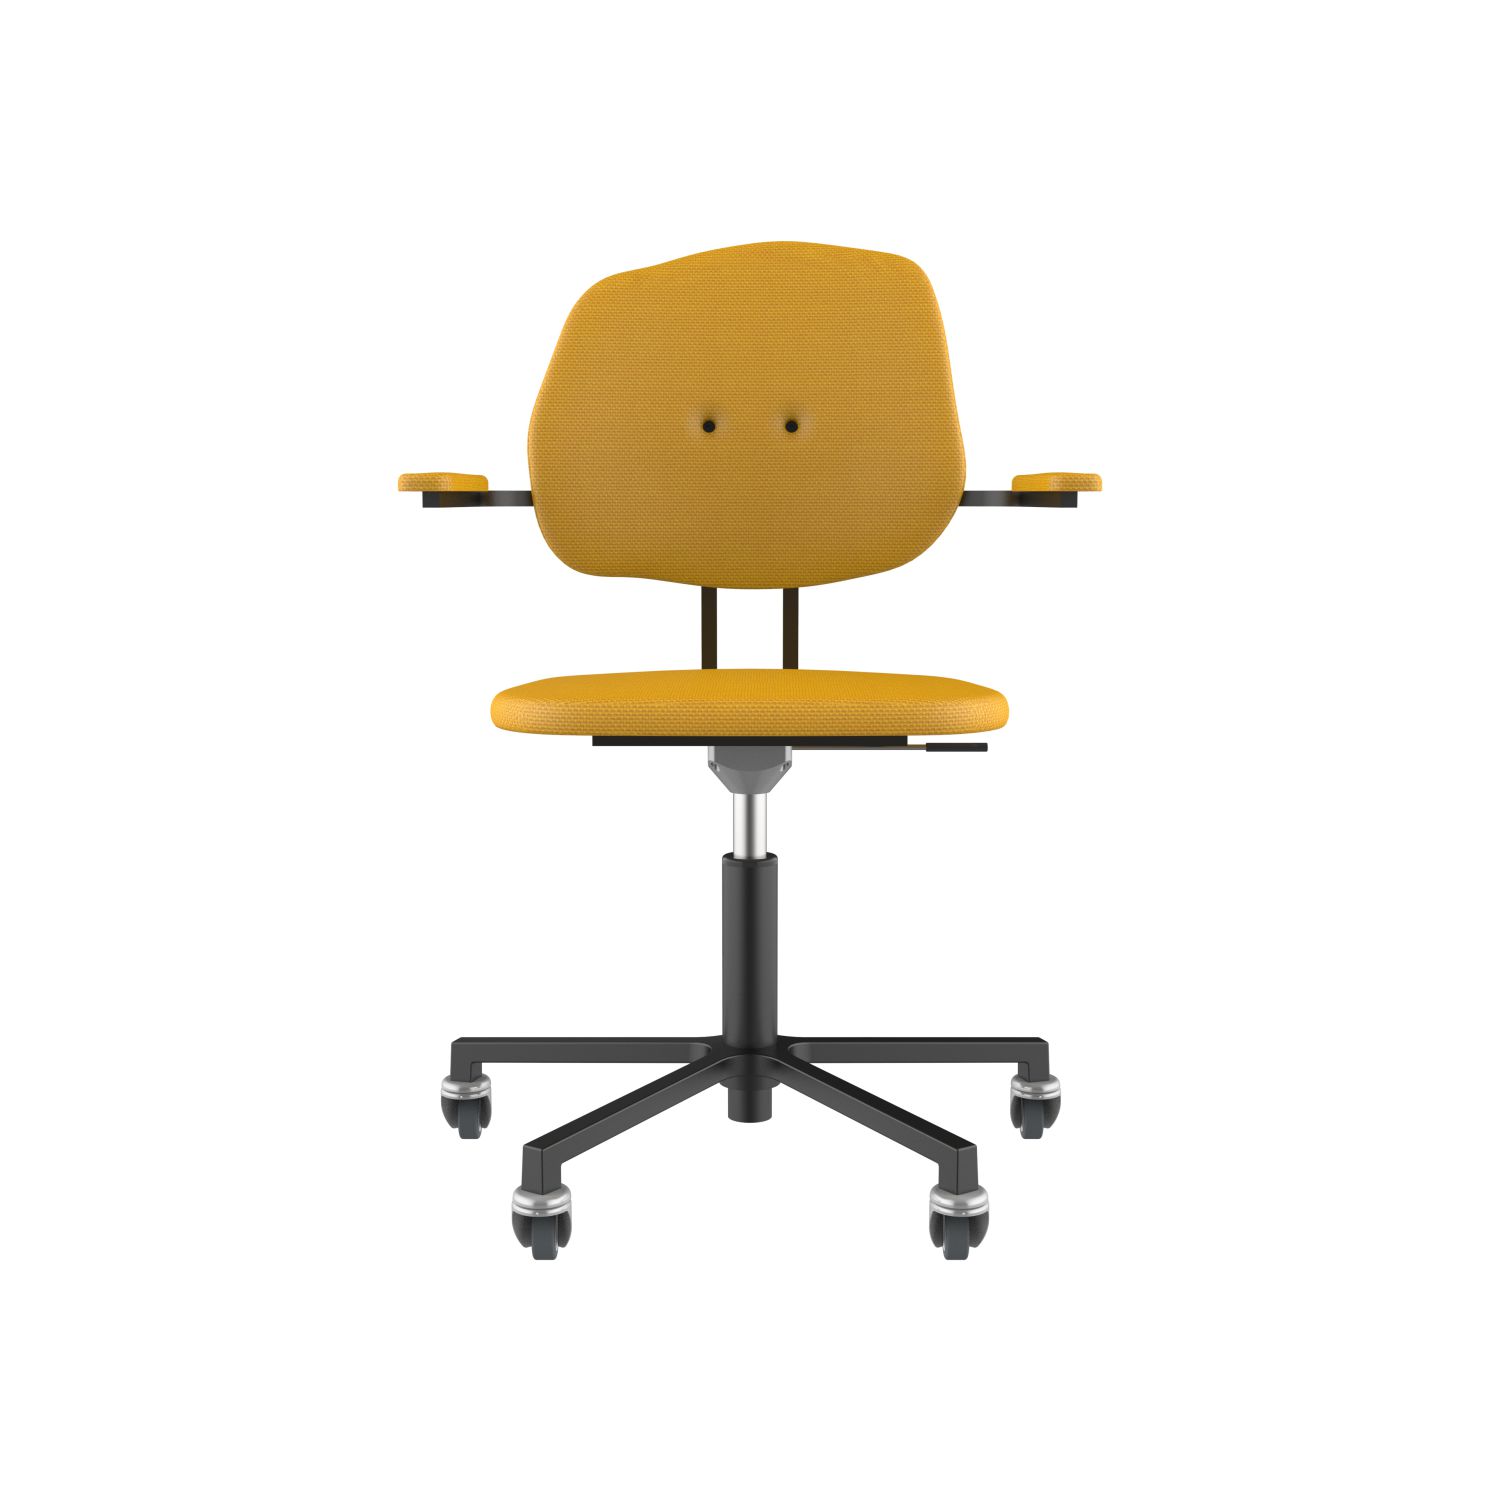 lensvelt maarten baas office chair with armrests backrest g lemon yellow 051 black ral9005 soft wheels